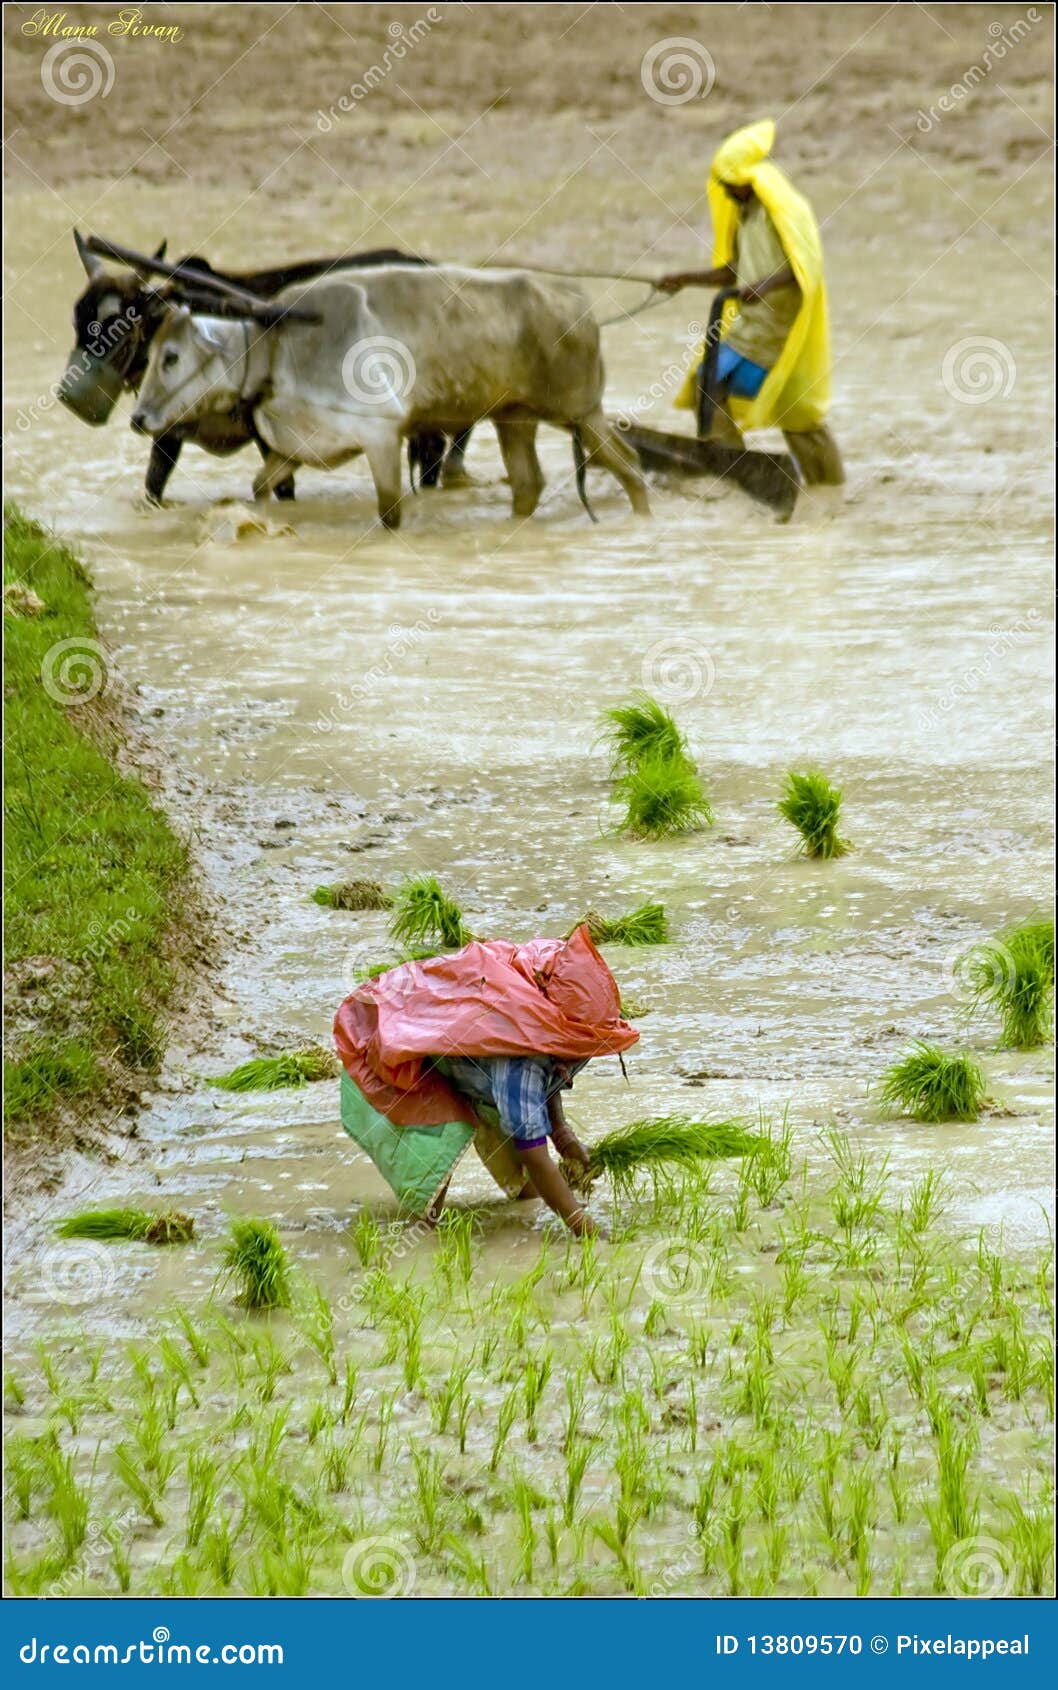 monsoon farming